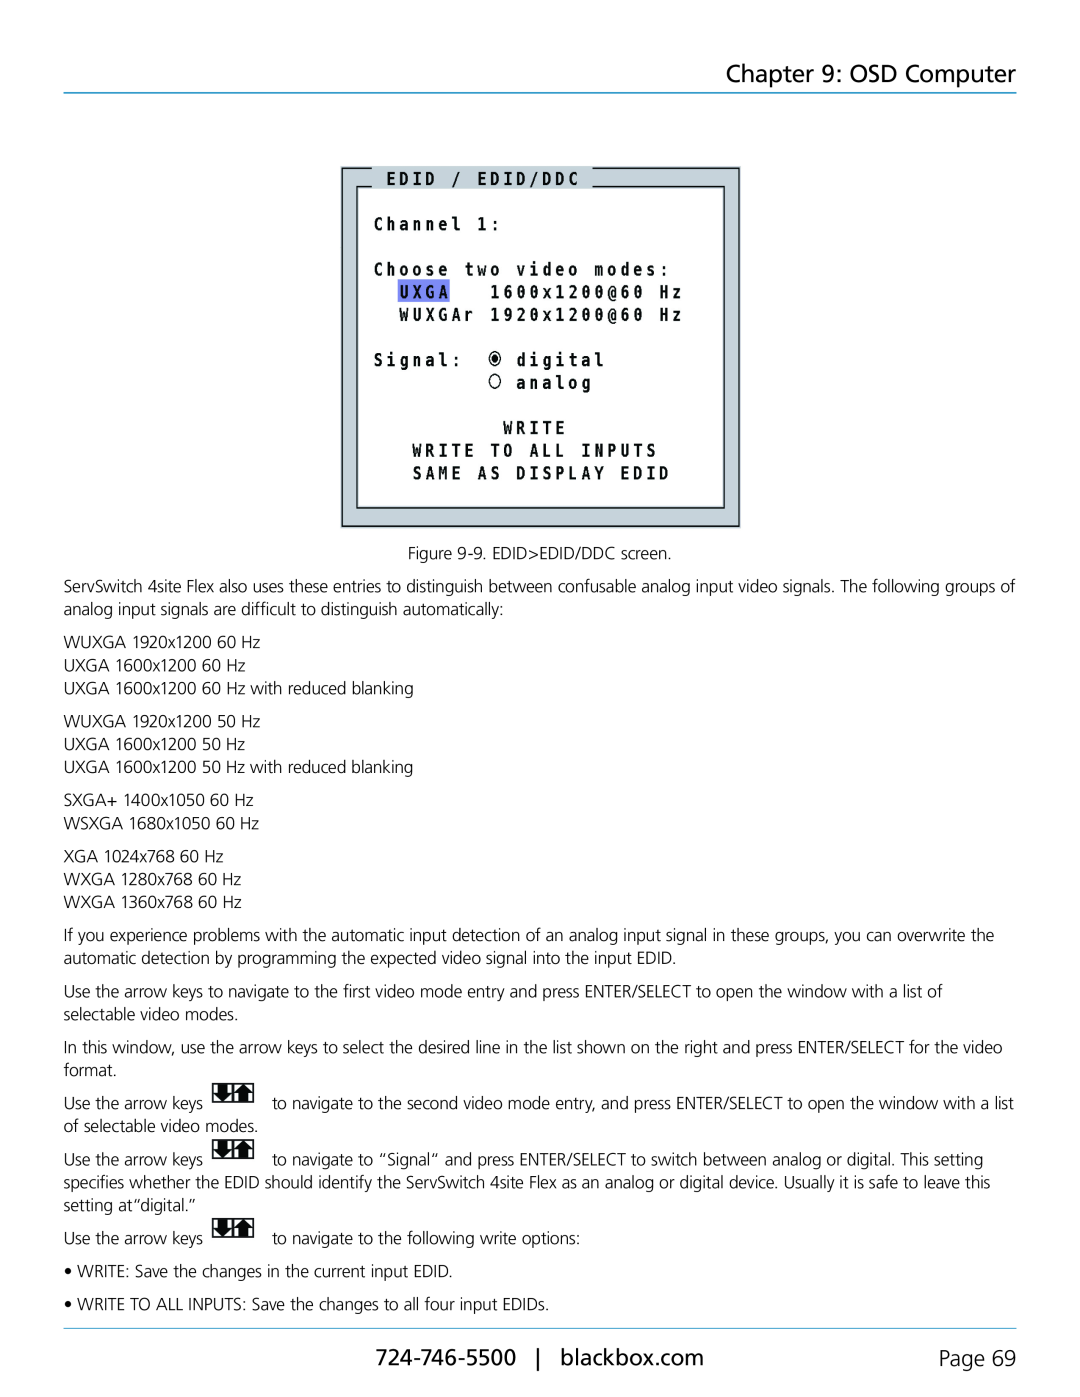 Black Box servswitch 4site flex, KVP40004A manual OSD Computer, Page, 9. EDIDEDID/DDC screen 